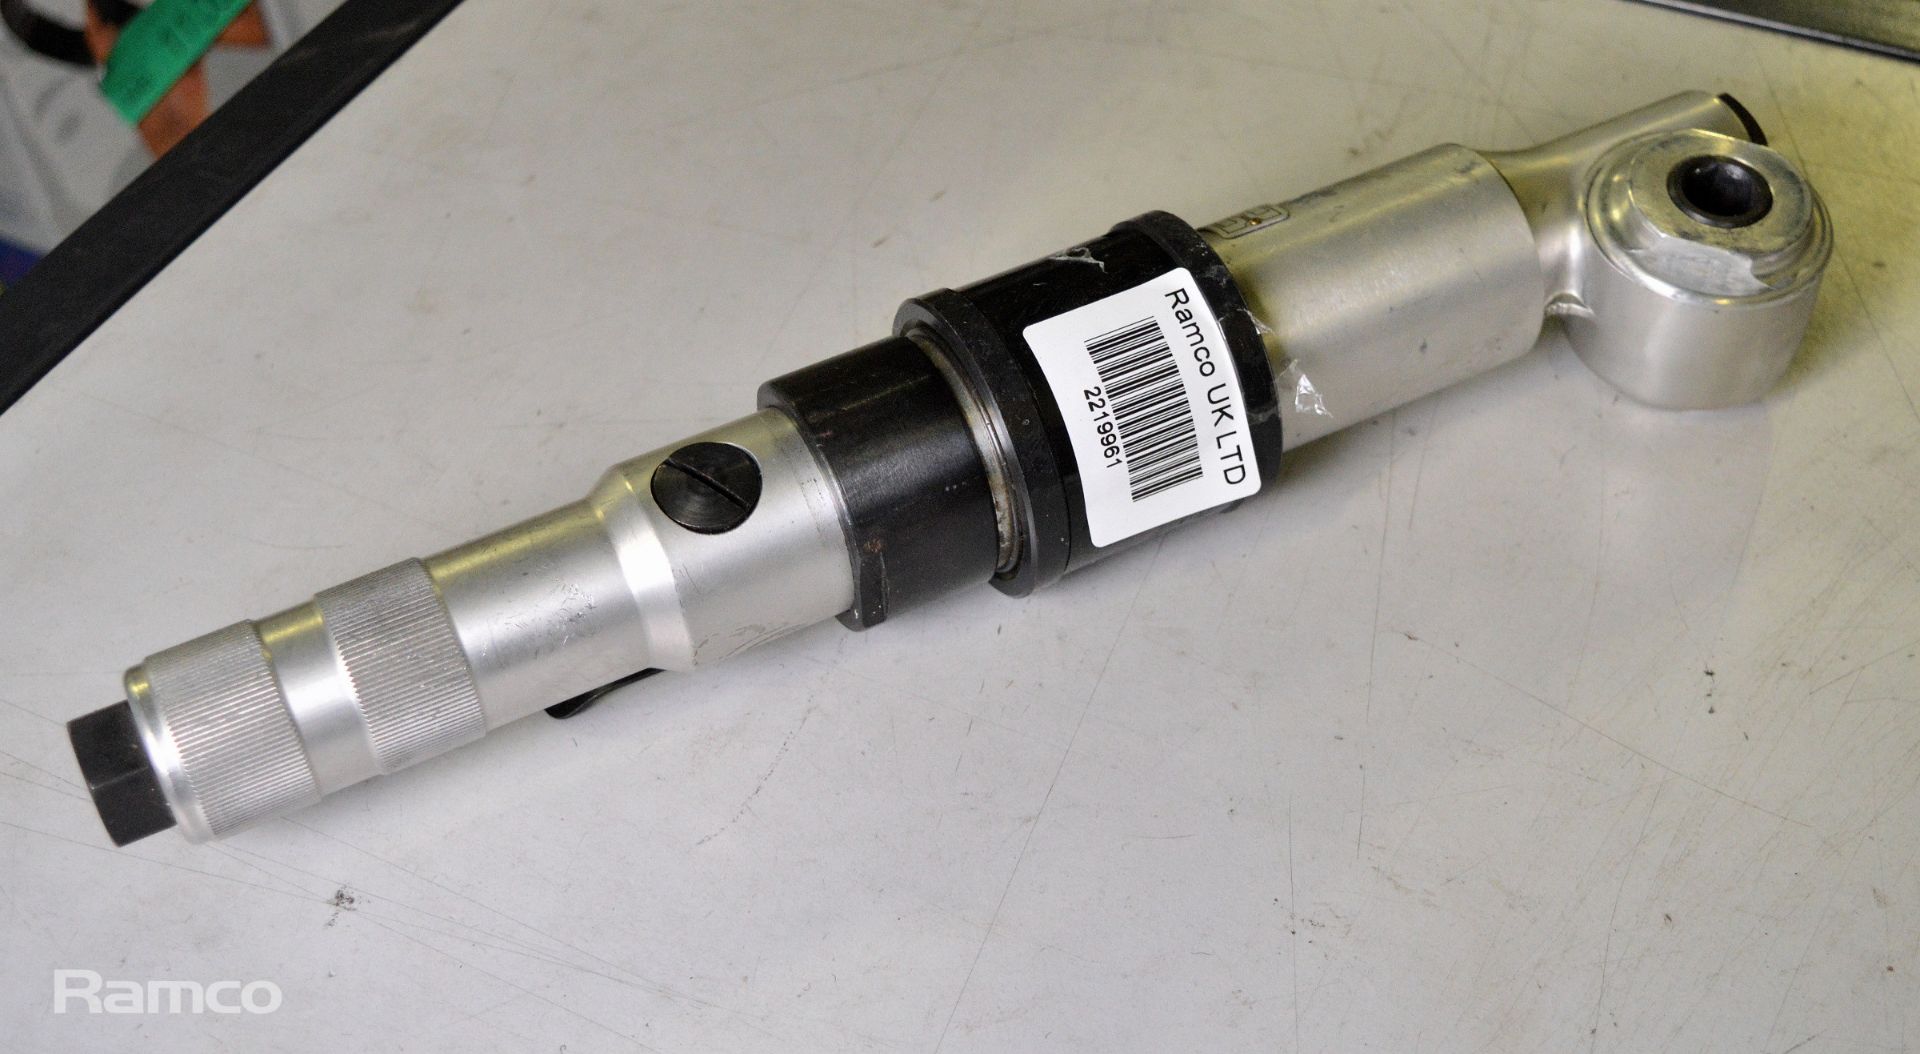 Desoutter H410-N Pneumatic Impact Wrench